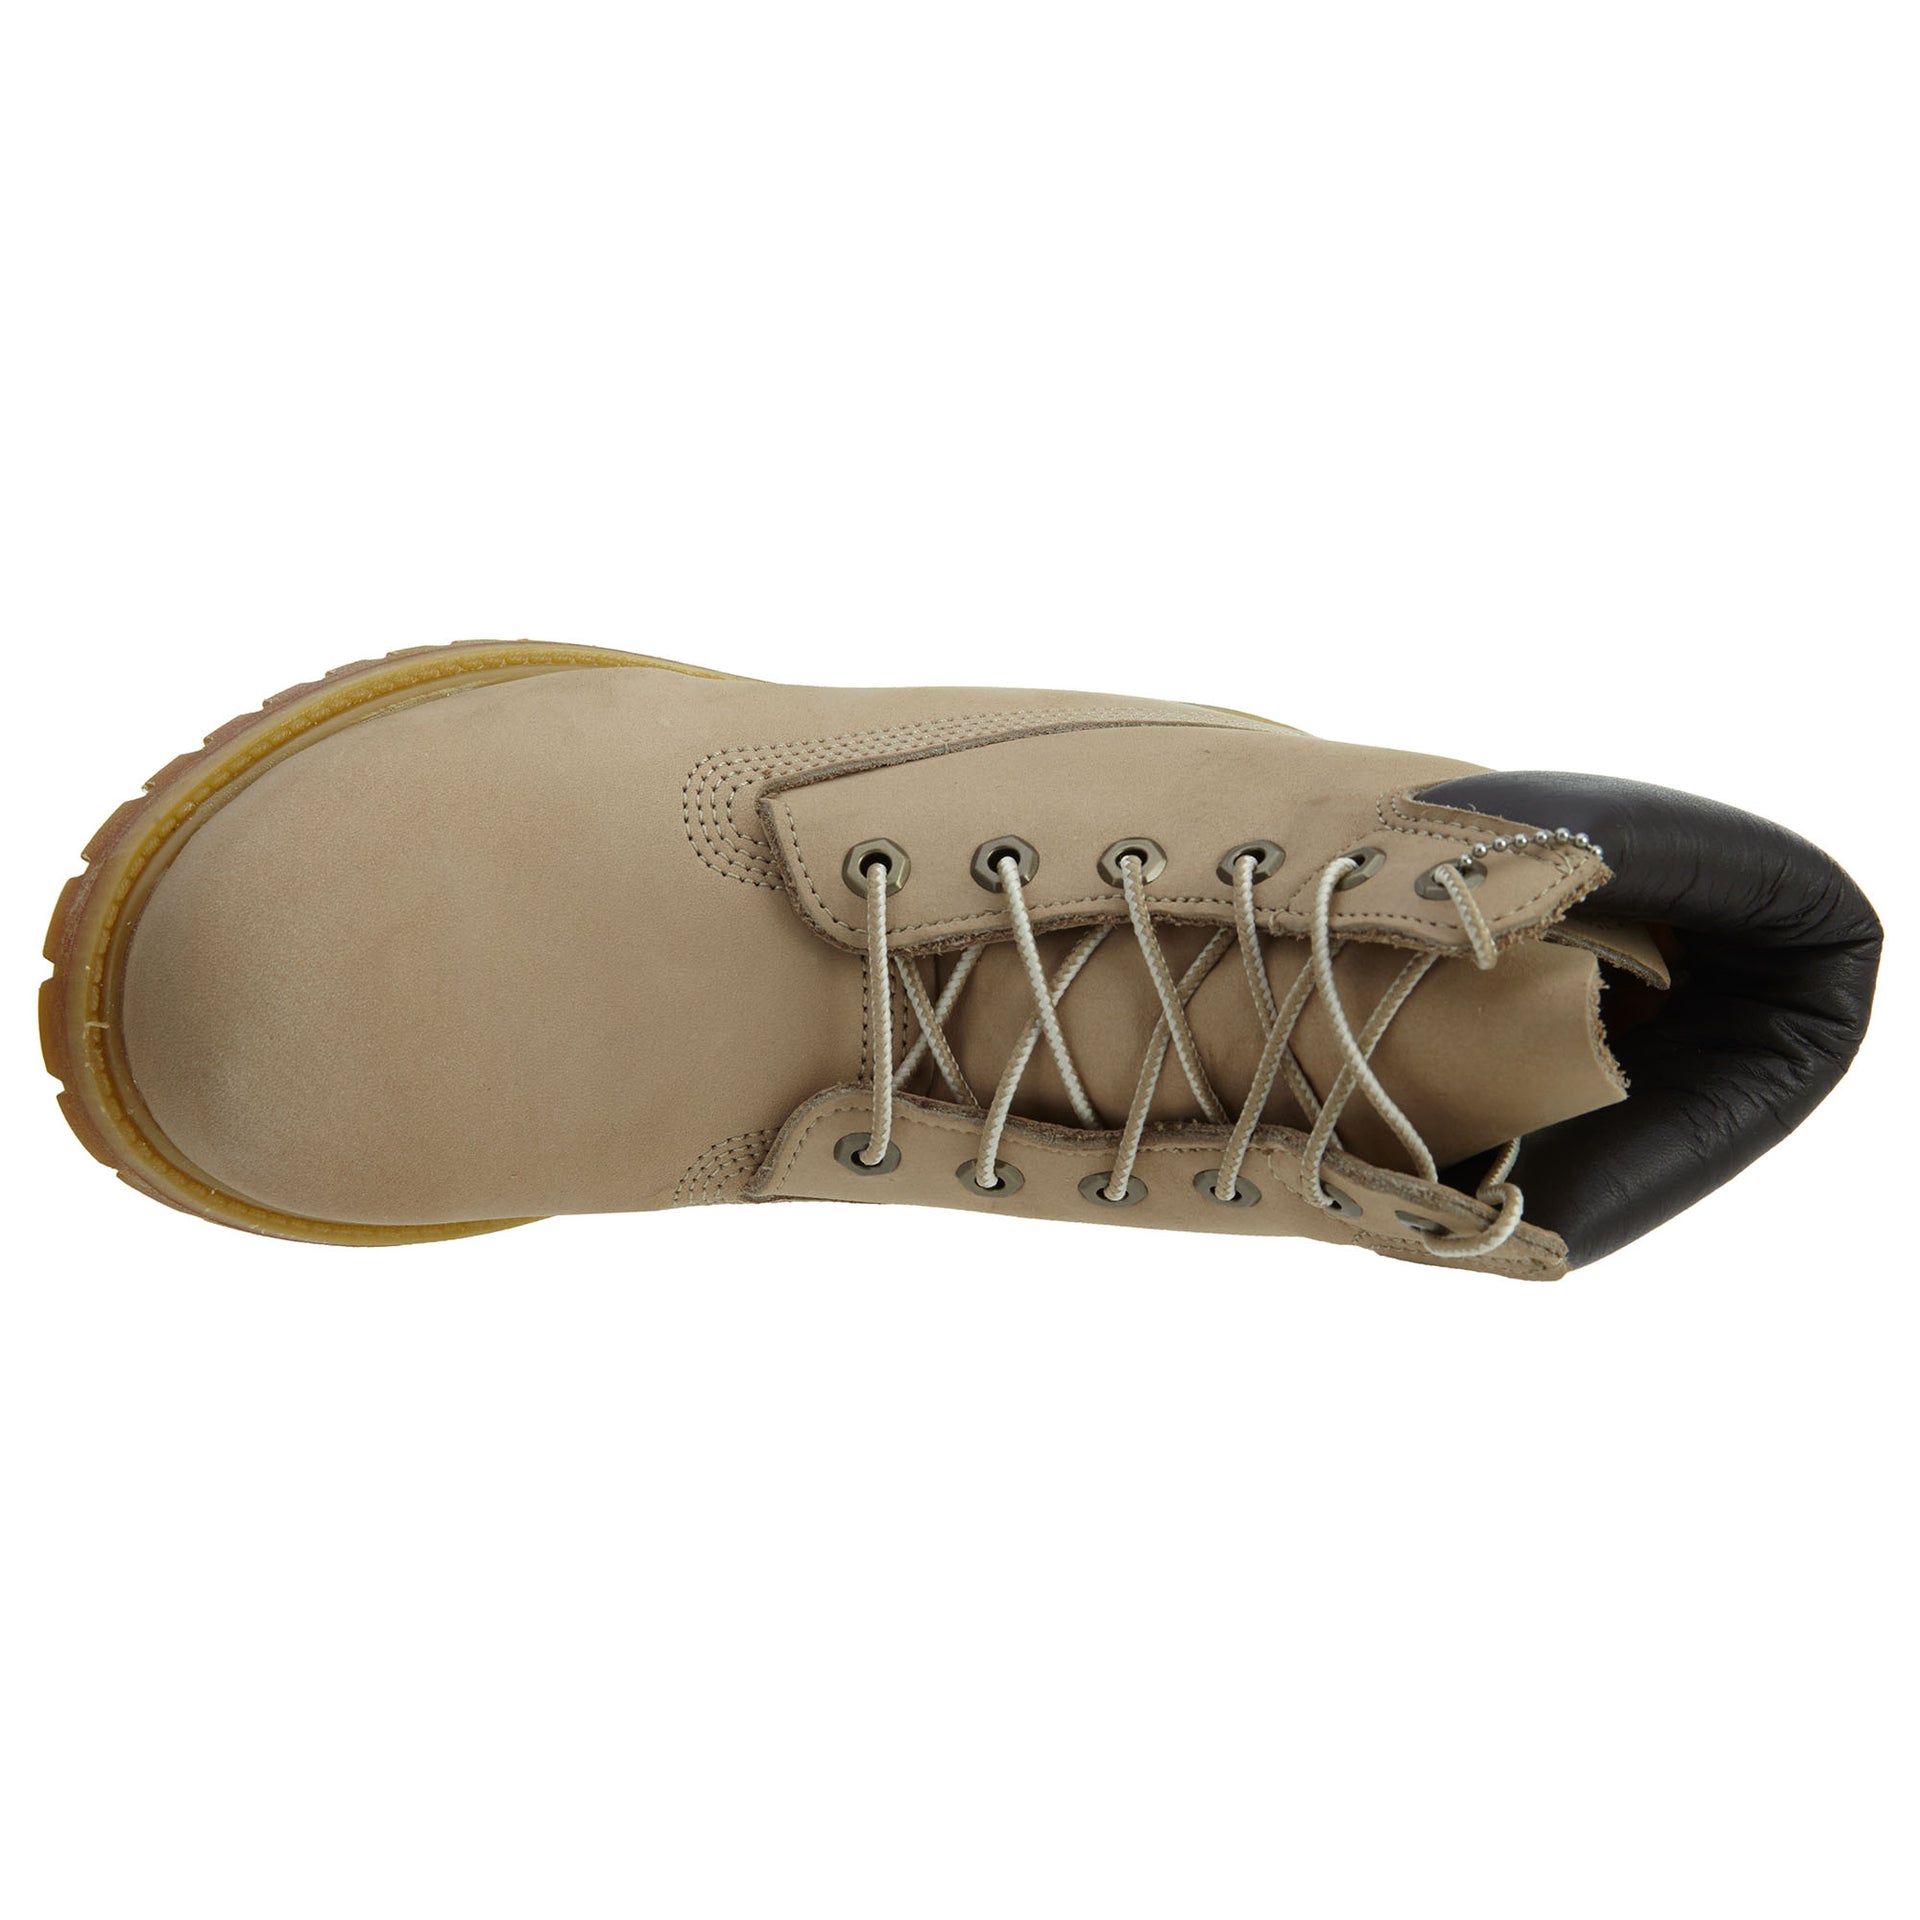 Timberland 6" Premium Boot Womens Style : Tb0a12mq